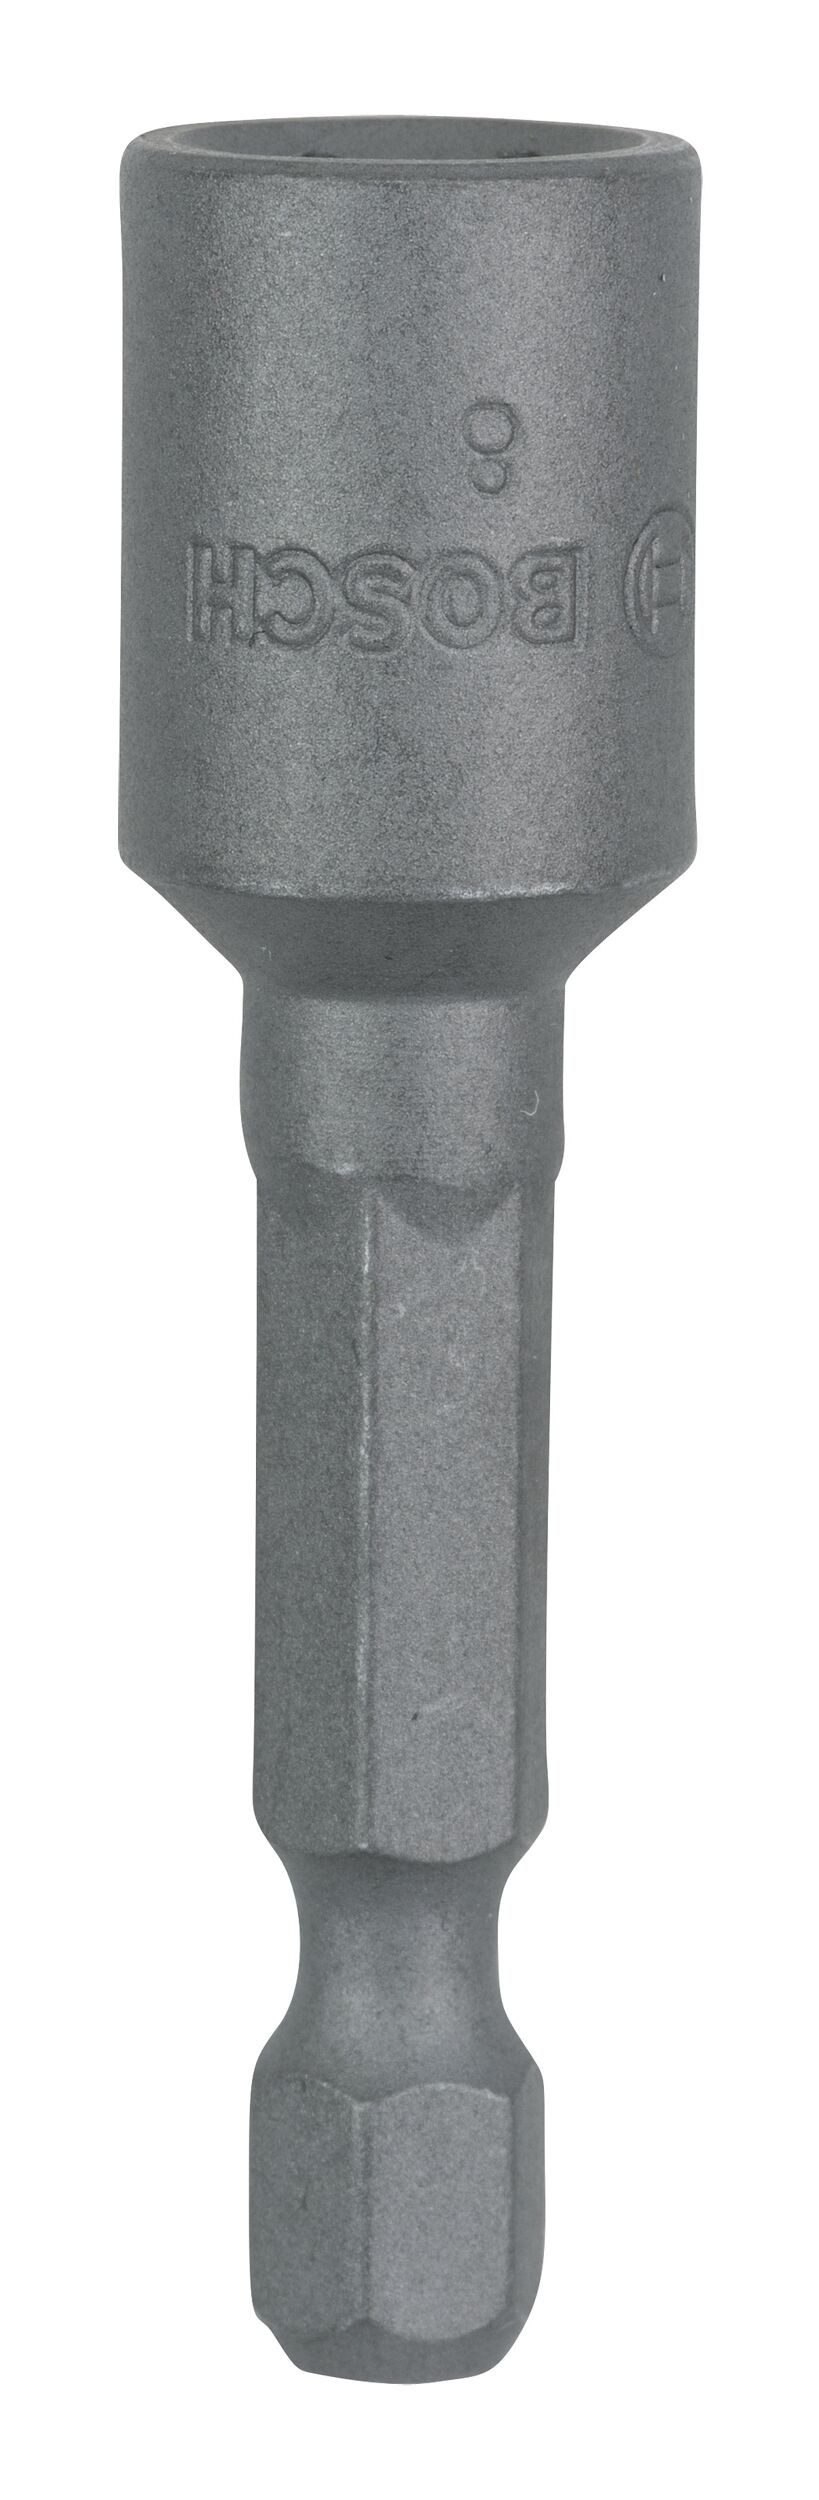 BOSCH Stecknuss, Steckschlüssel mit Magnet - 50 x 8 mm